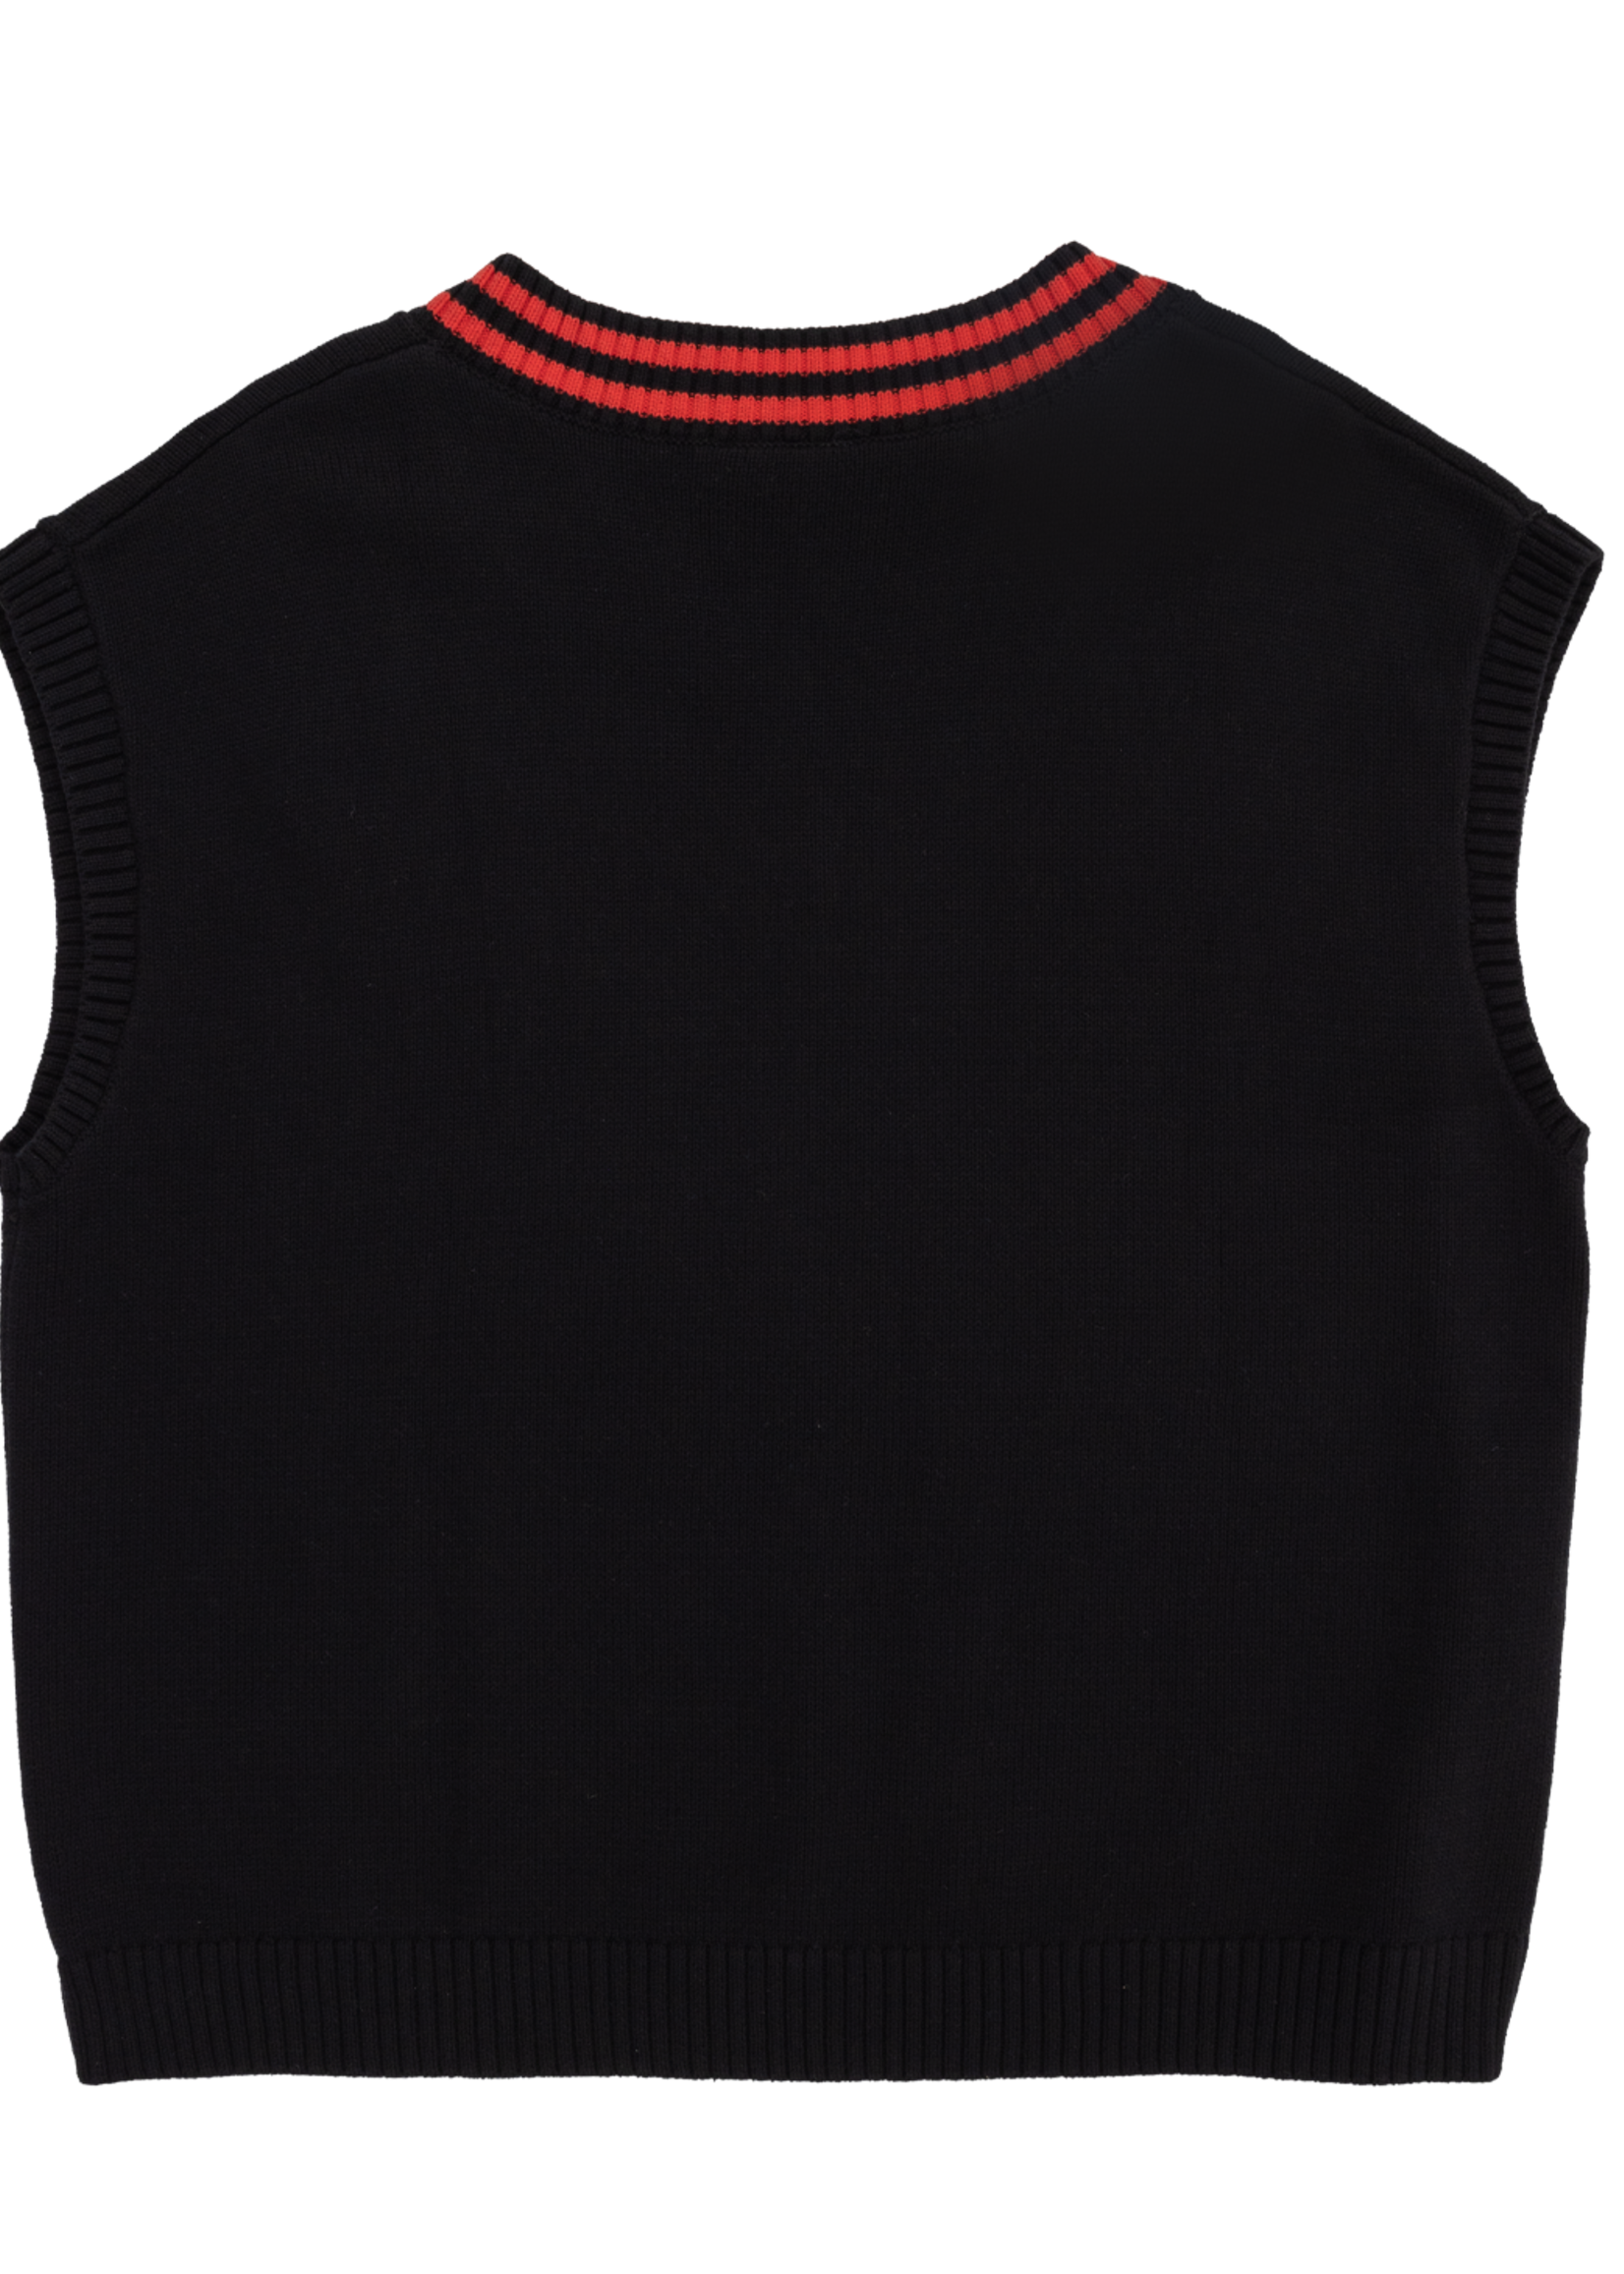 PLEASURES Outpost Oversized Sweater Vest in Black